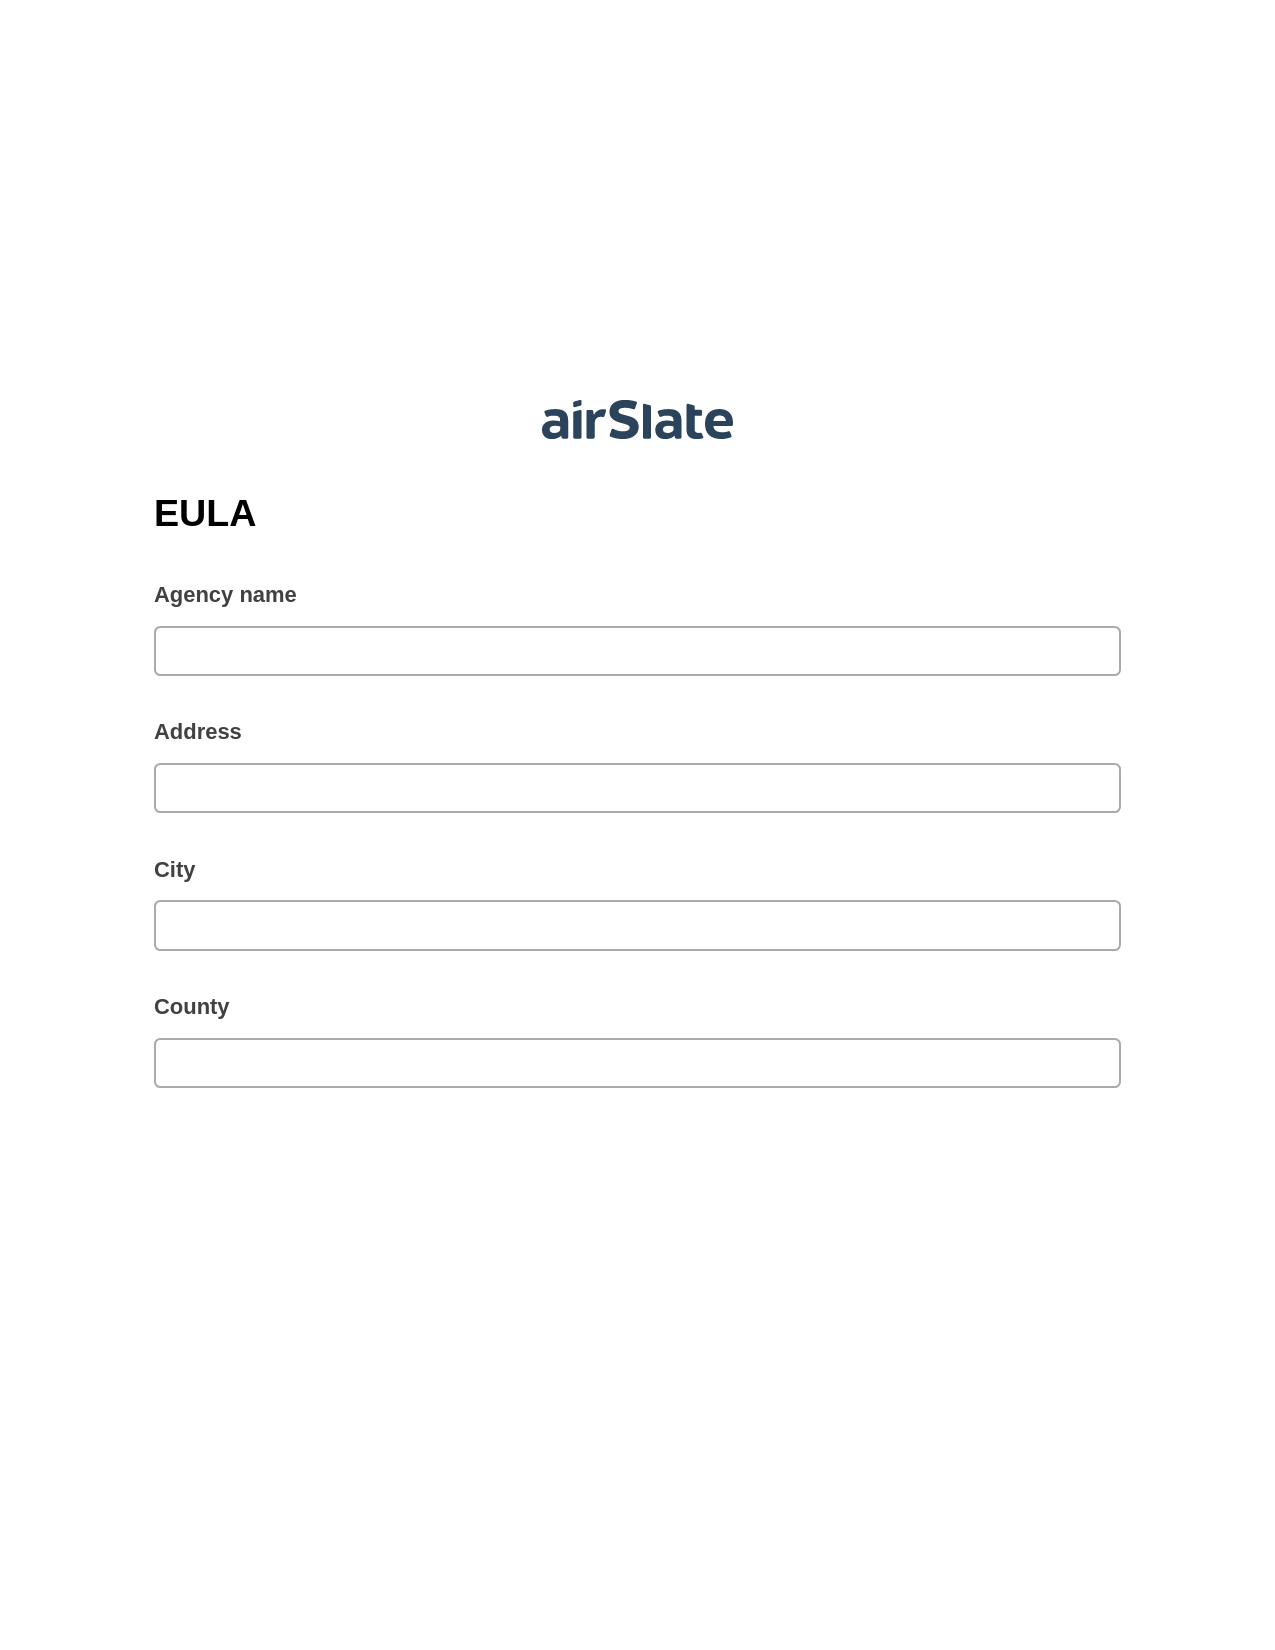 EULA Pre-fill from Google Sheet Dropdown Options Bot, Assign Slate Name Bot, Dropbox Bot